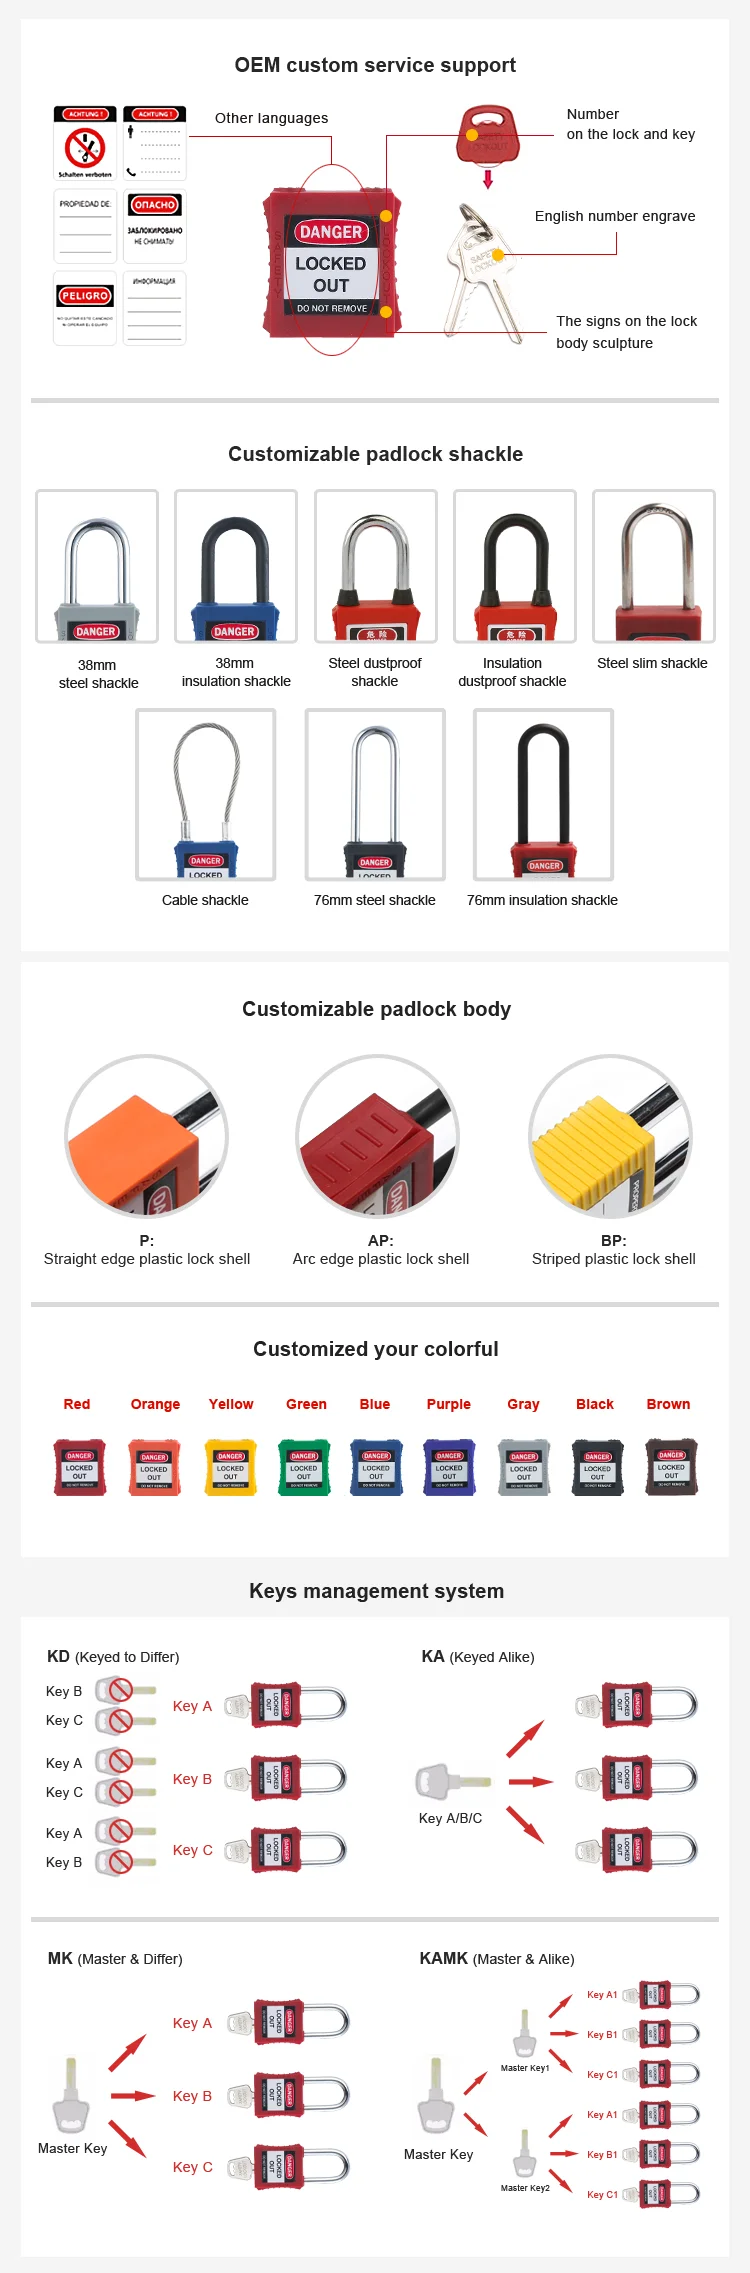 Brands Quality Custom 38mm Steel Shackle Safety Nylon Body Padlock